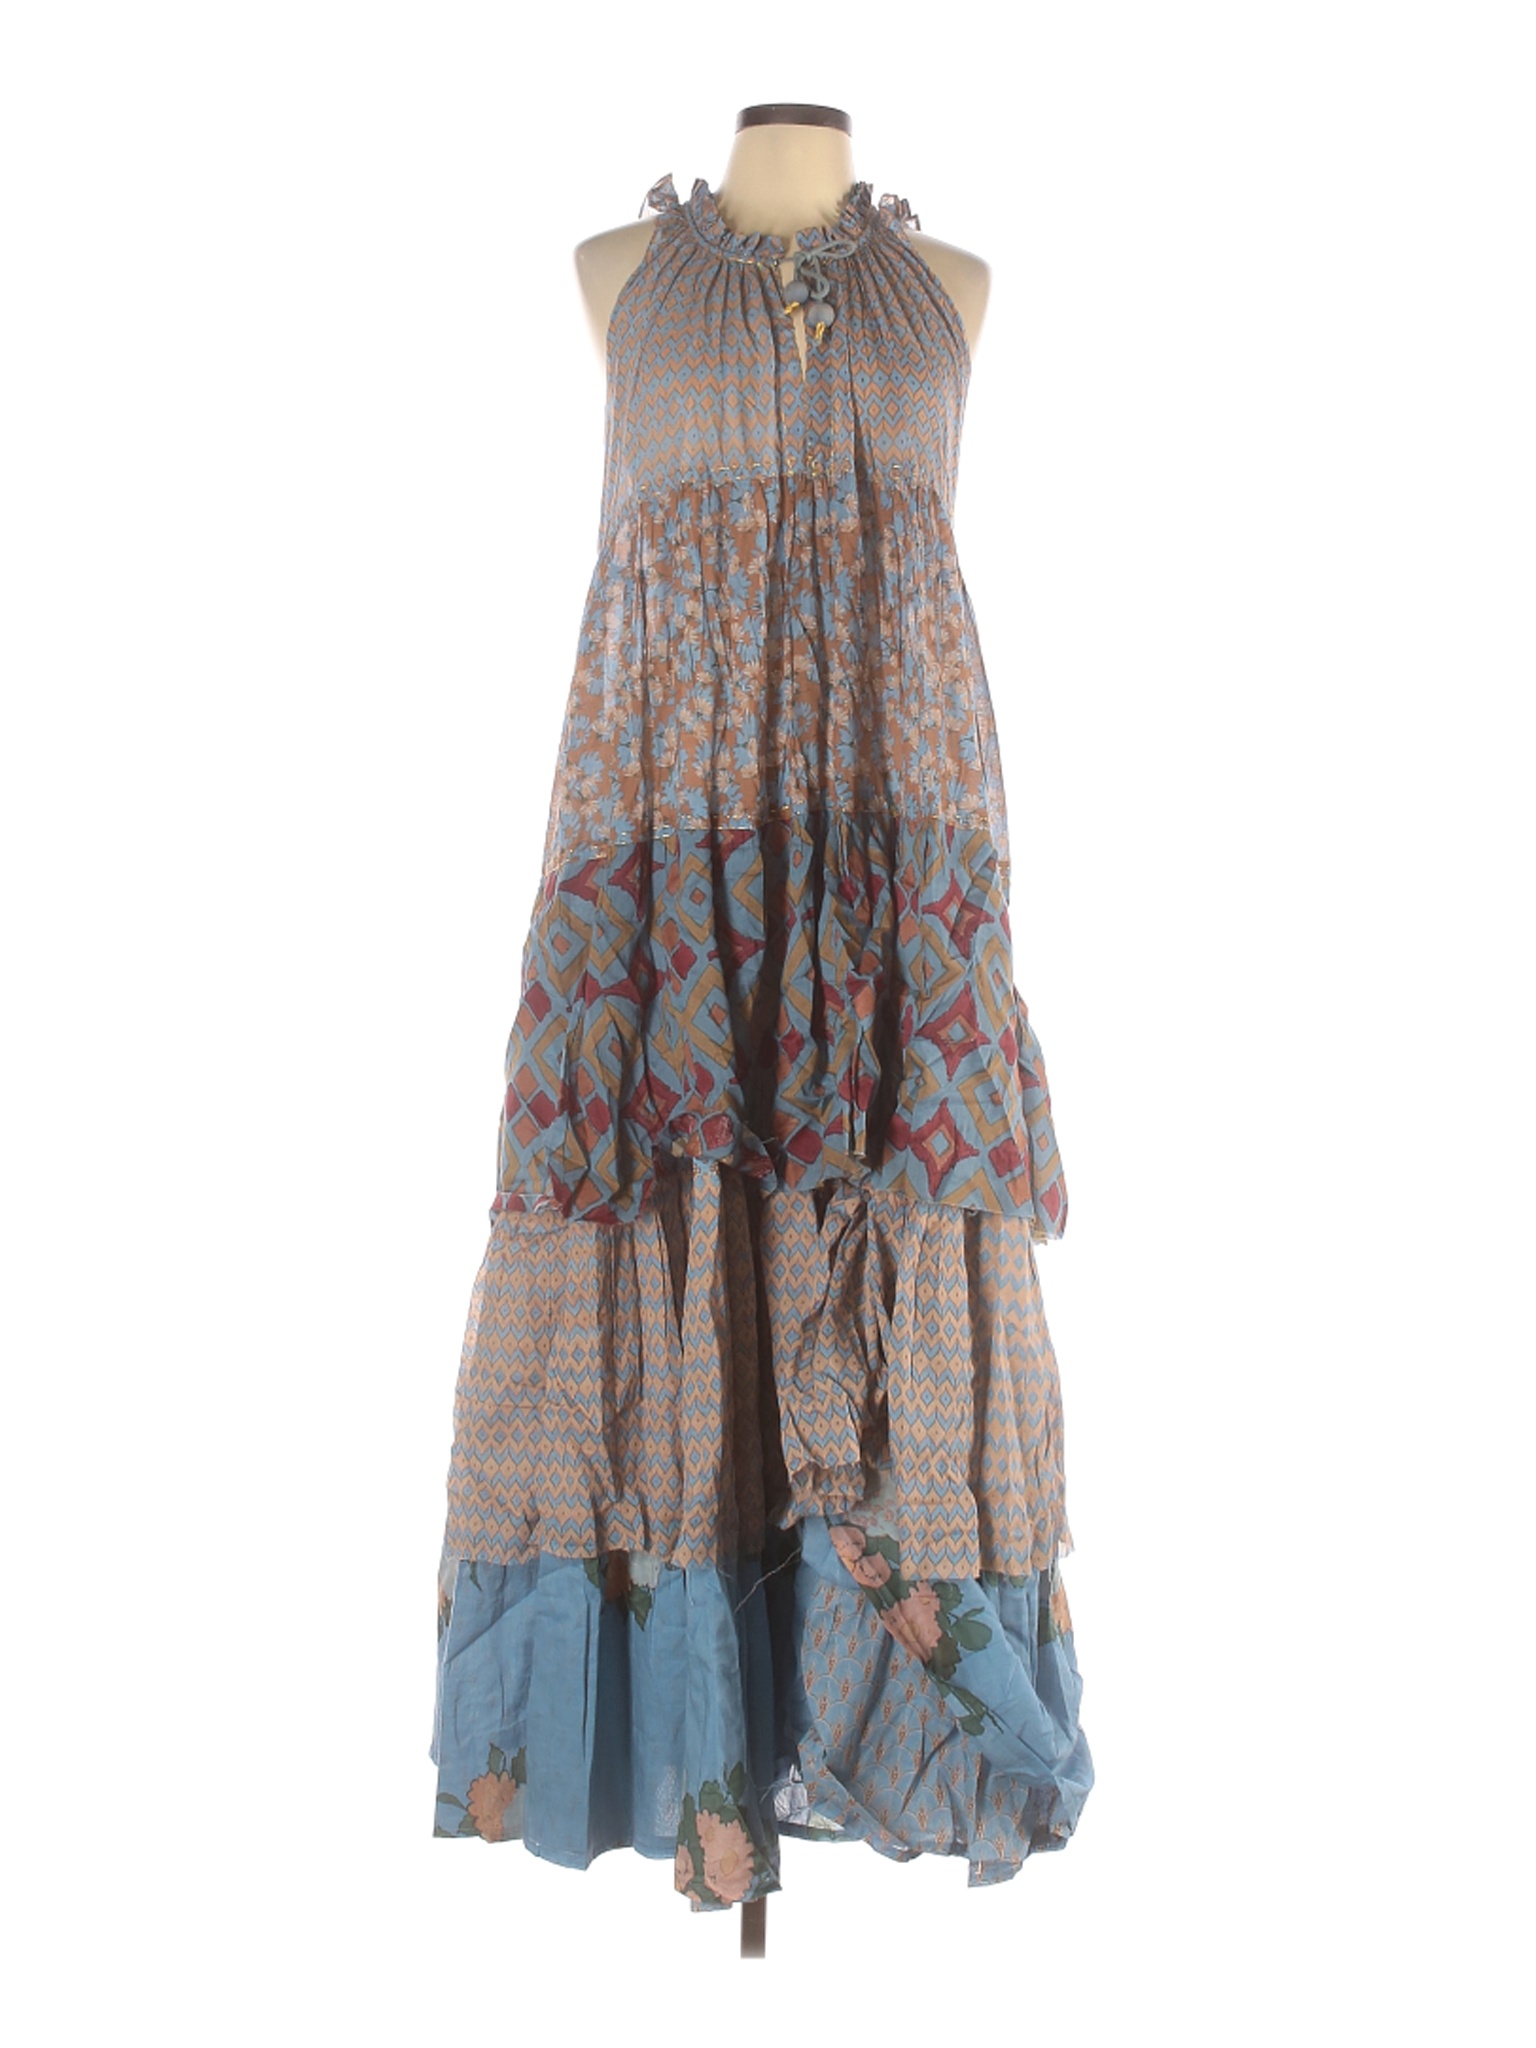 Yvonne S Blue Casual Dress Size L - 49% off | thredUP